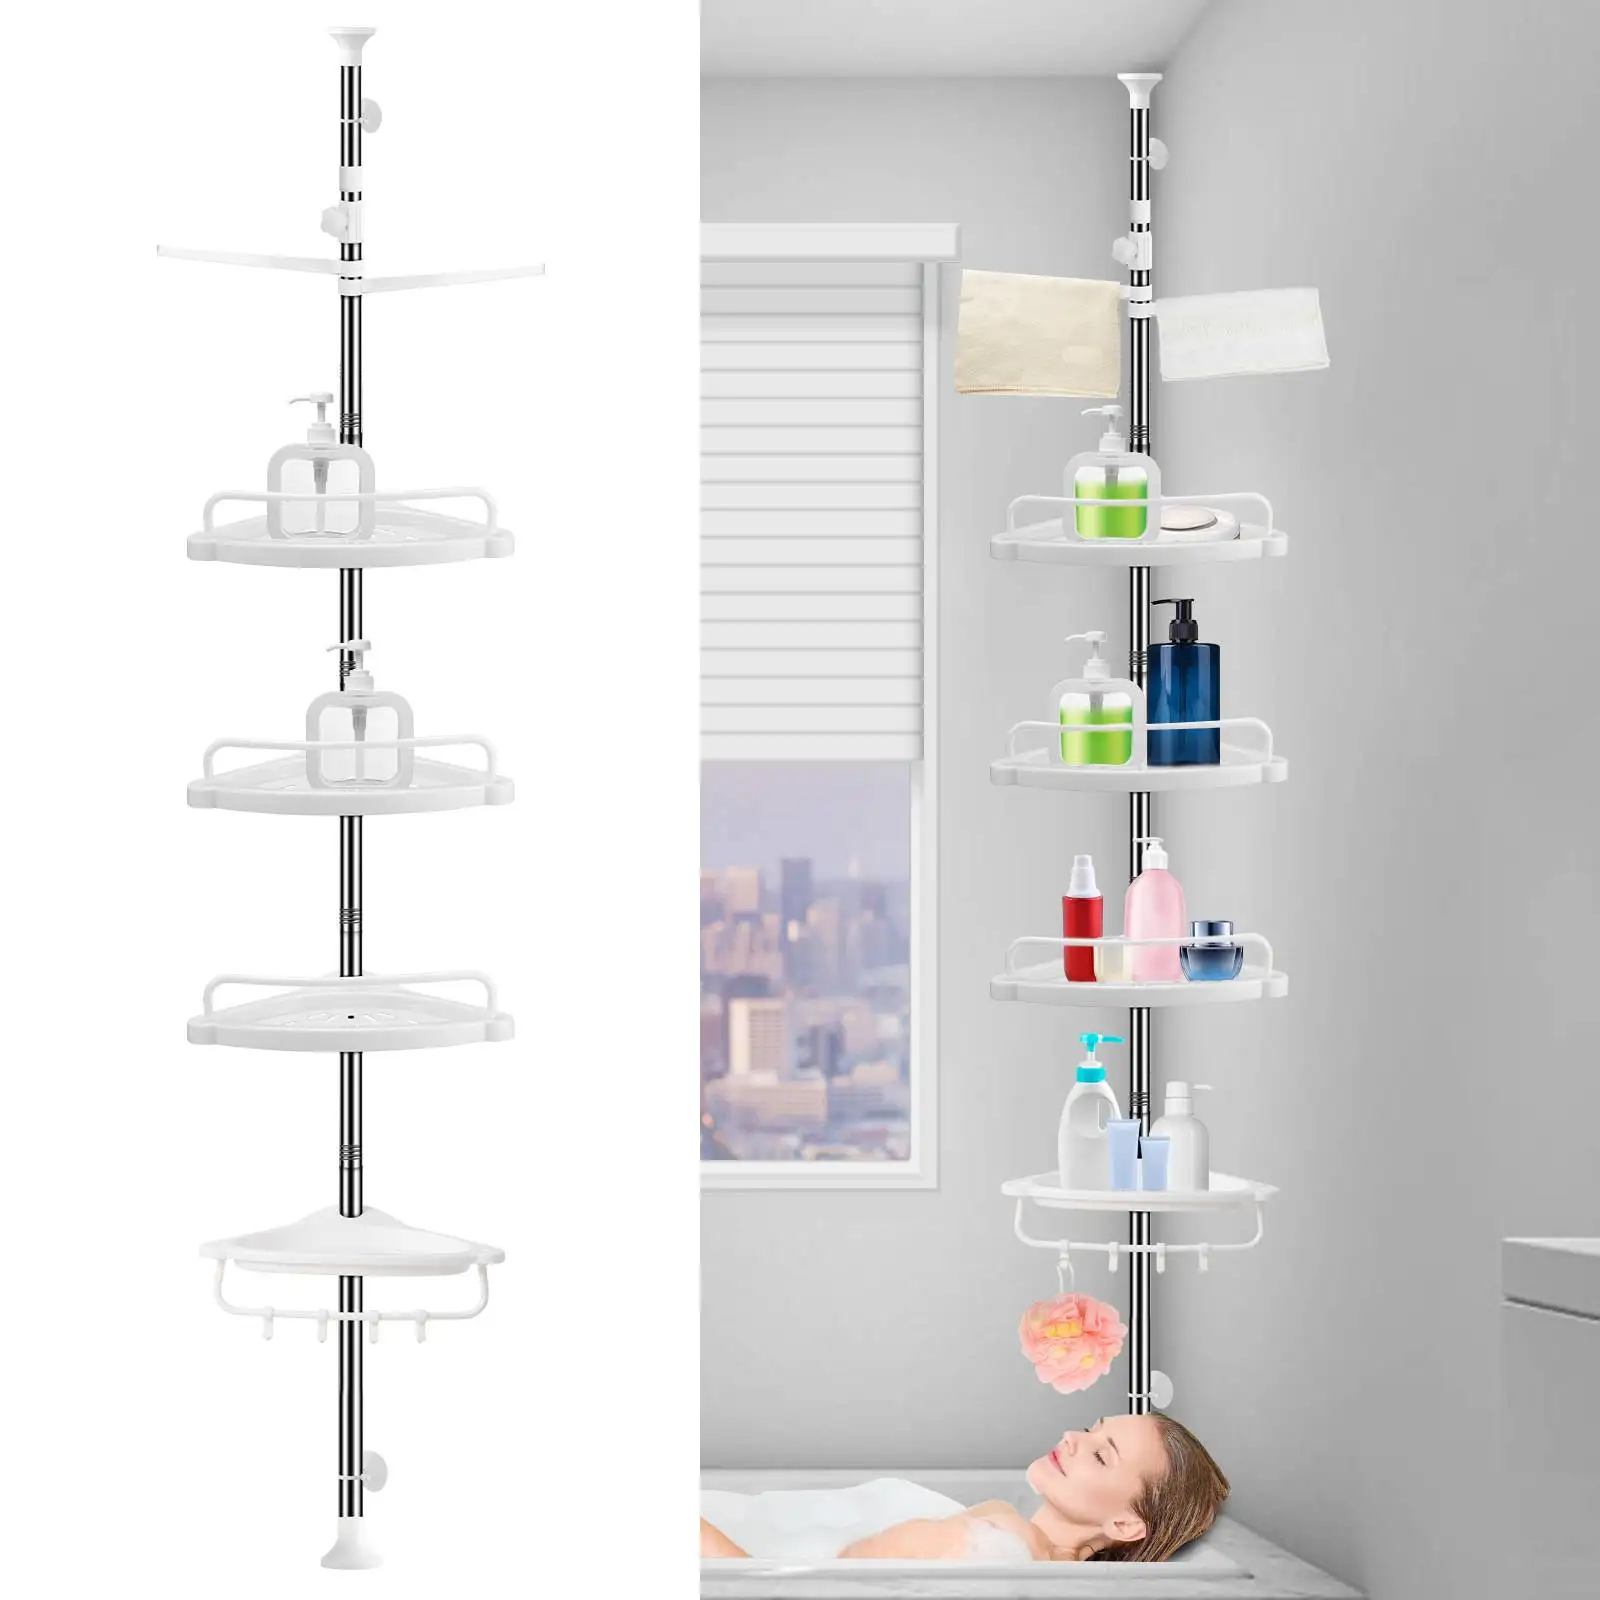 Bathroom Shower Height Tier Organizer Home 8-10ft Pole Shelf Corner Tension 4 Racks Rustproof Shower Adjustable Caddy Caddy